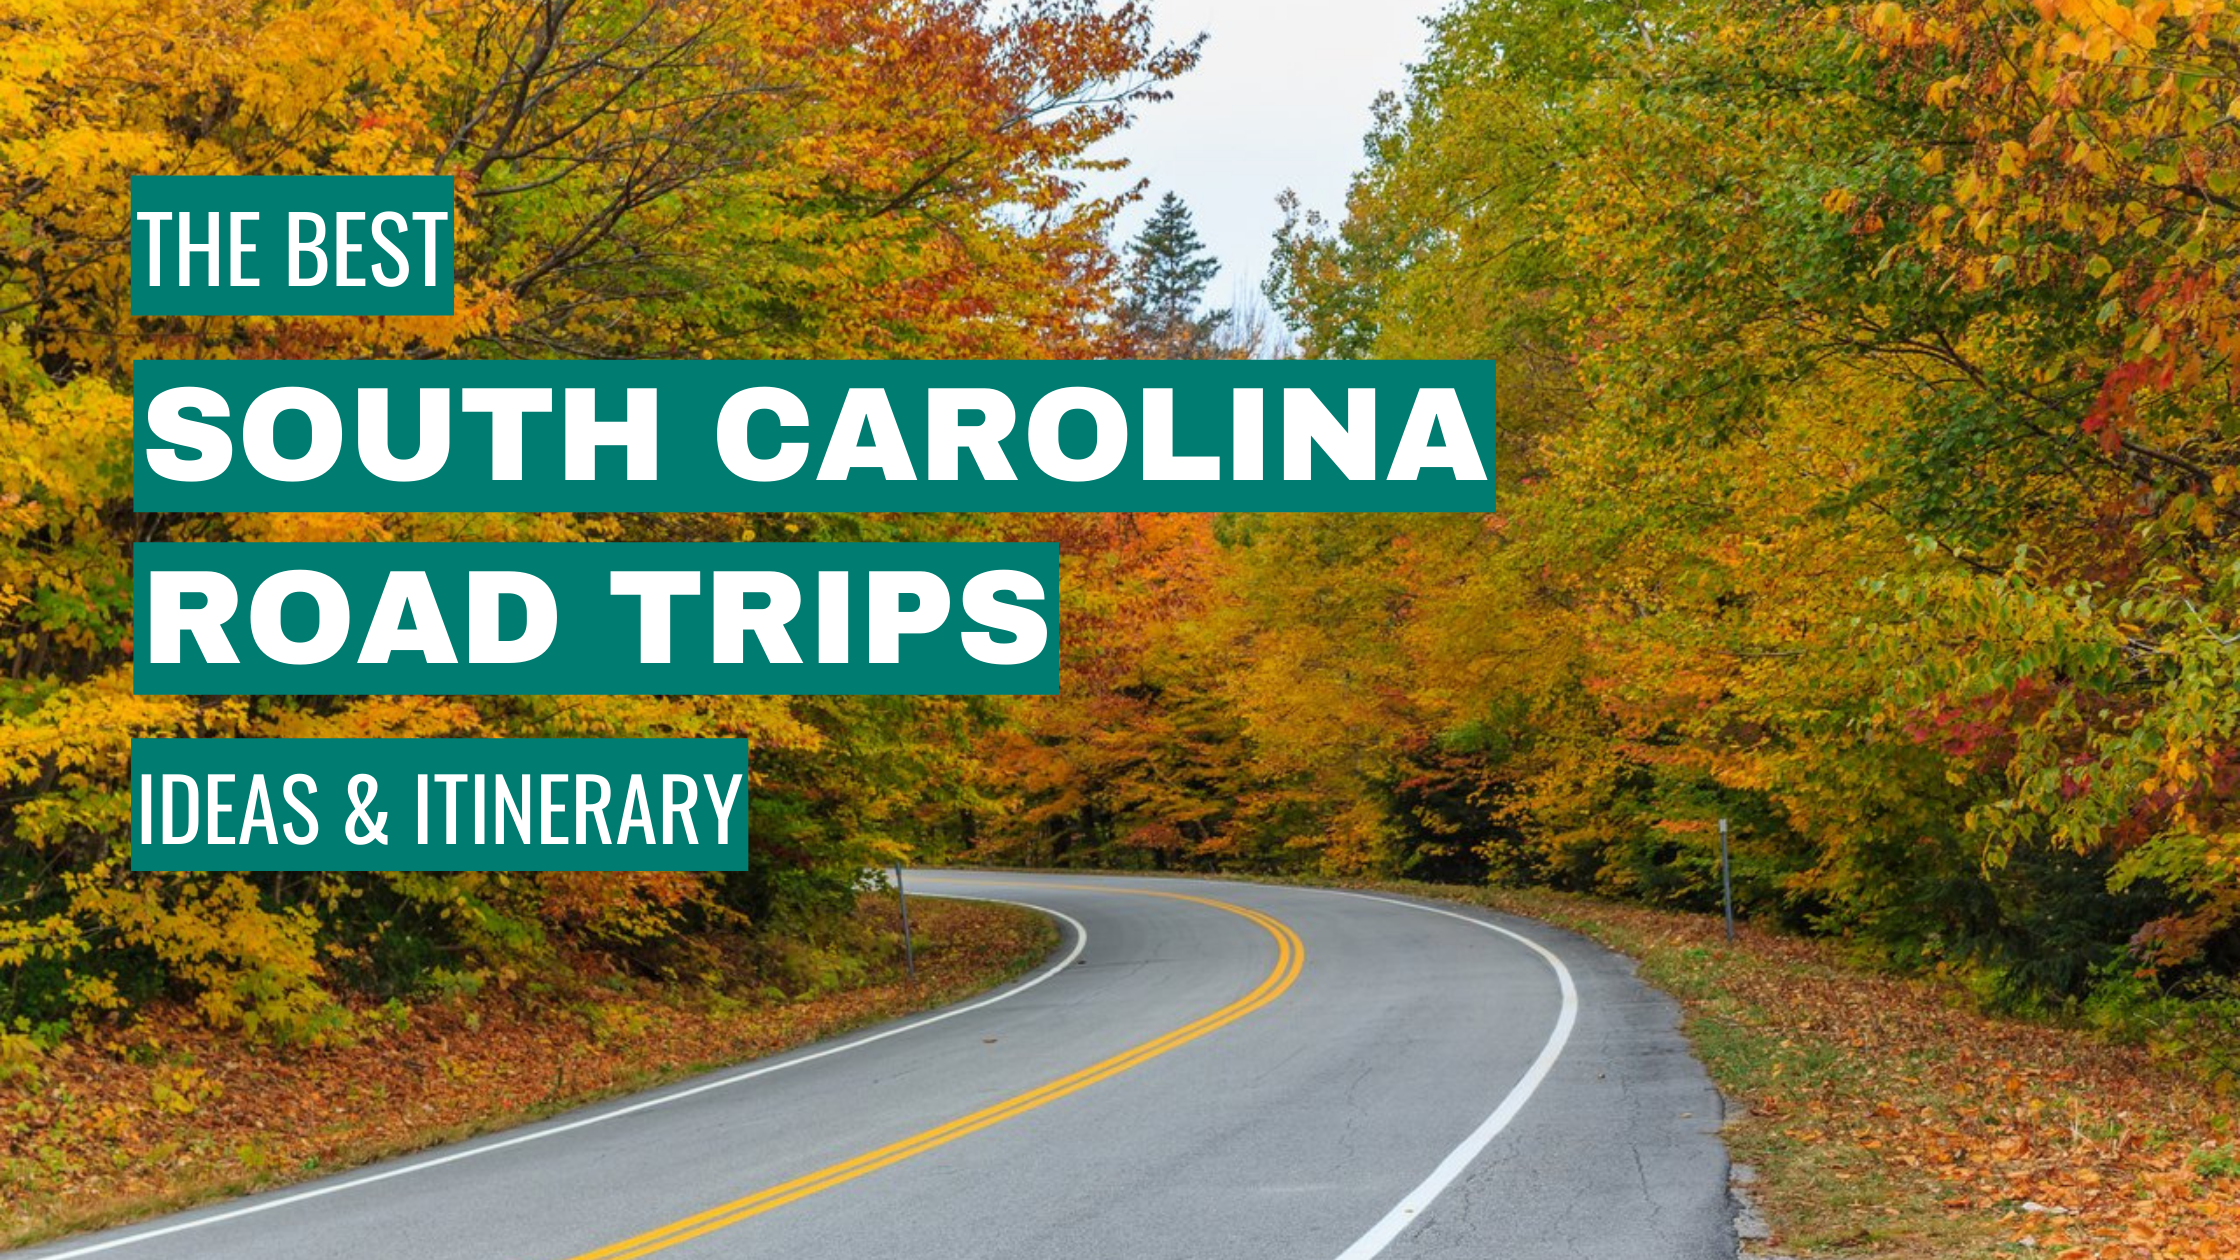 South Carolina Road Trip Ideas: 11 Best Road Trips + Itinerary